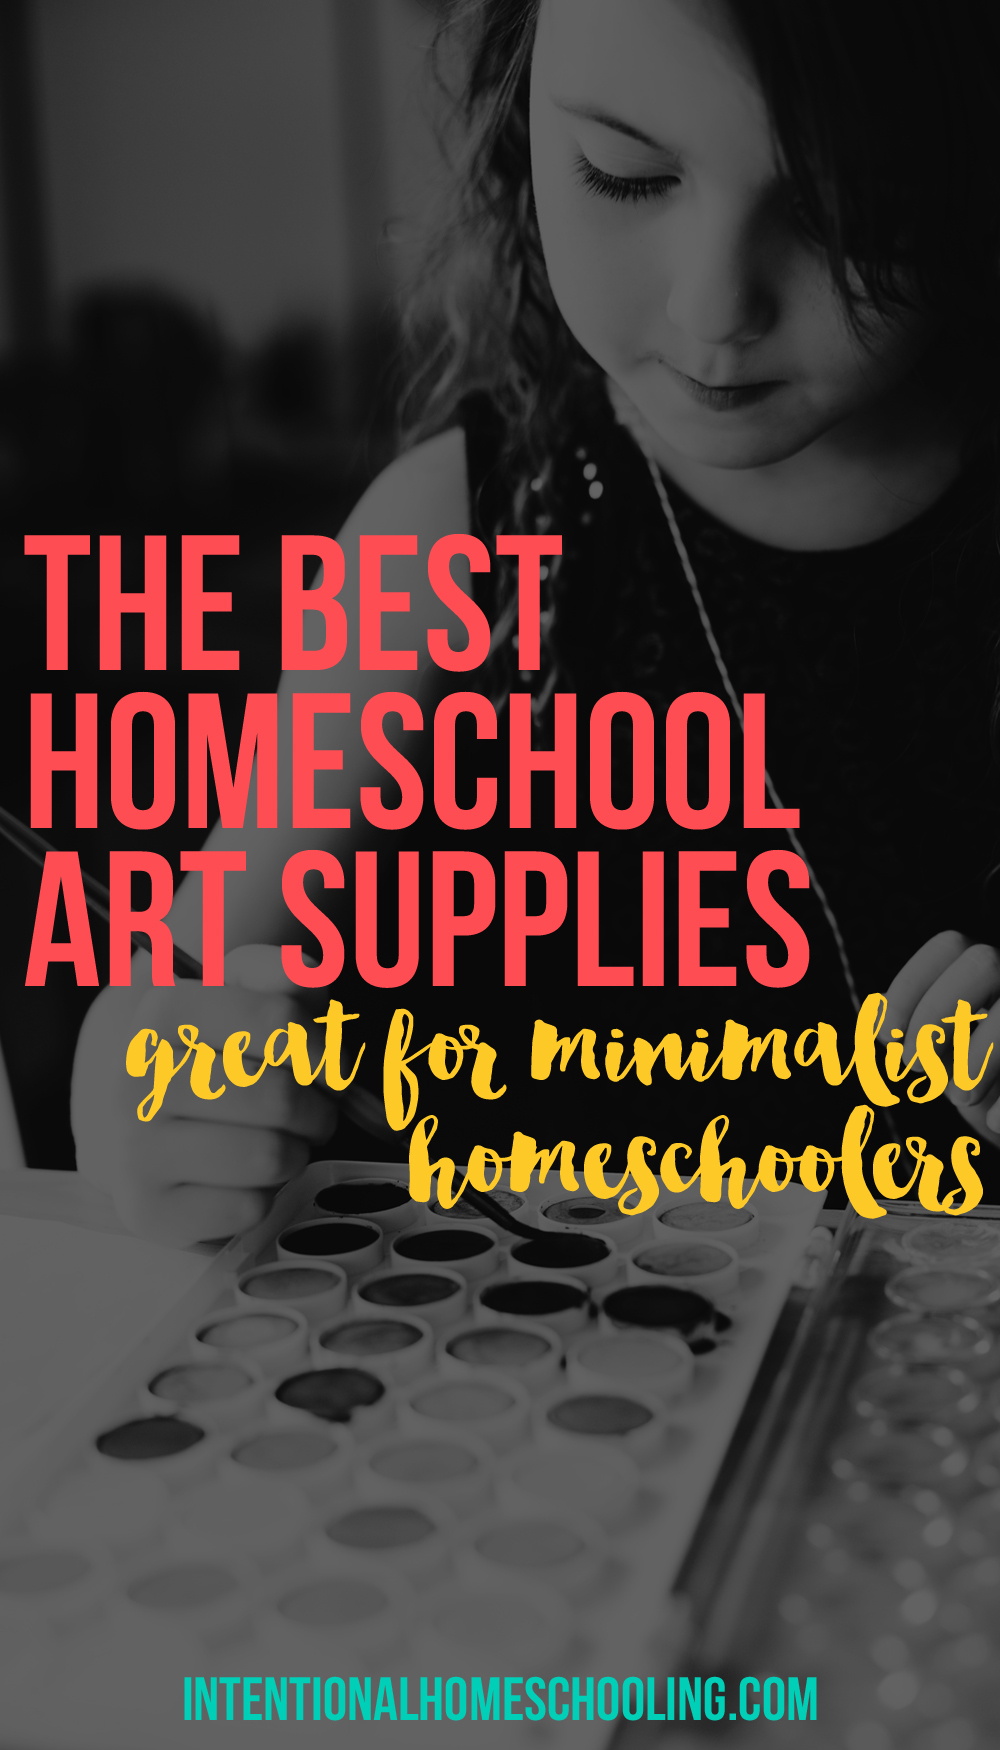 The Seven Best Homeschool Art Supplies - great for minimalist homeschooling